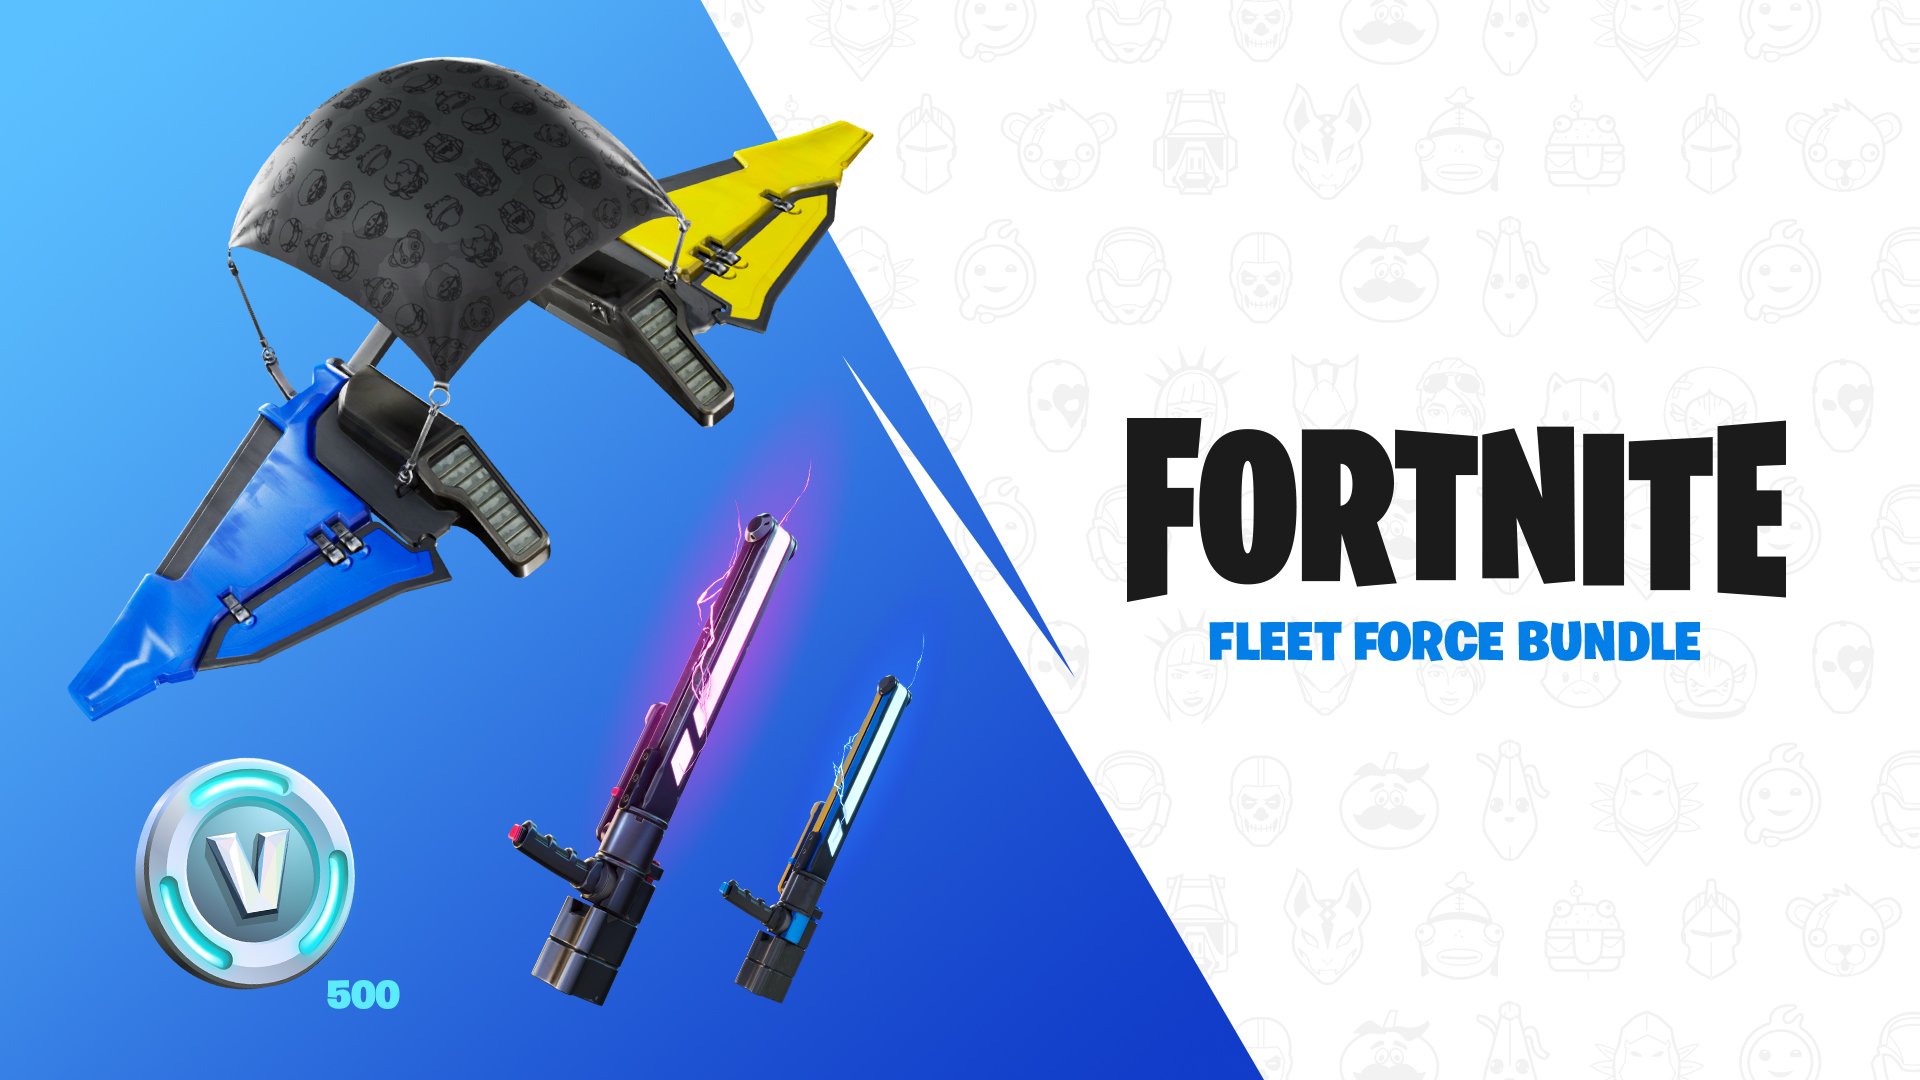 Brand new Fortnite Joycon Fleet force bundle. NO CODE - Video games &  consoles